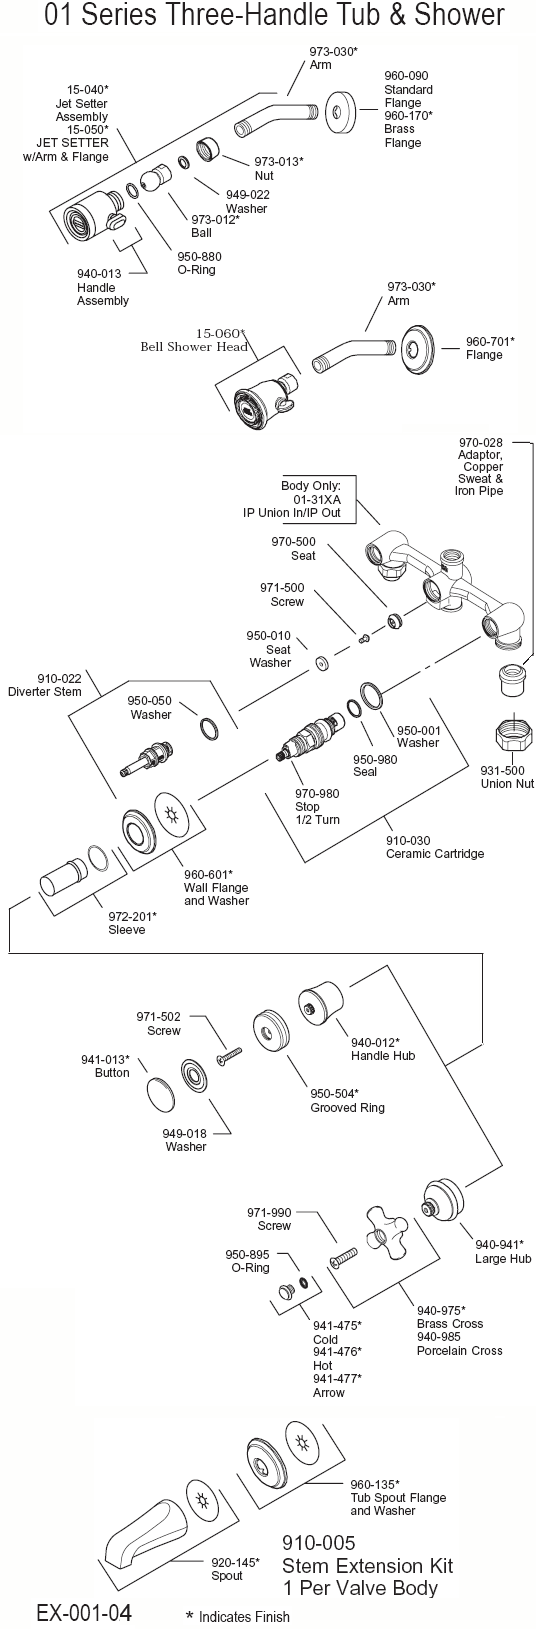 Savannah Shower & Tub Parts Diagram Model 01-8cbc